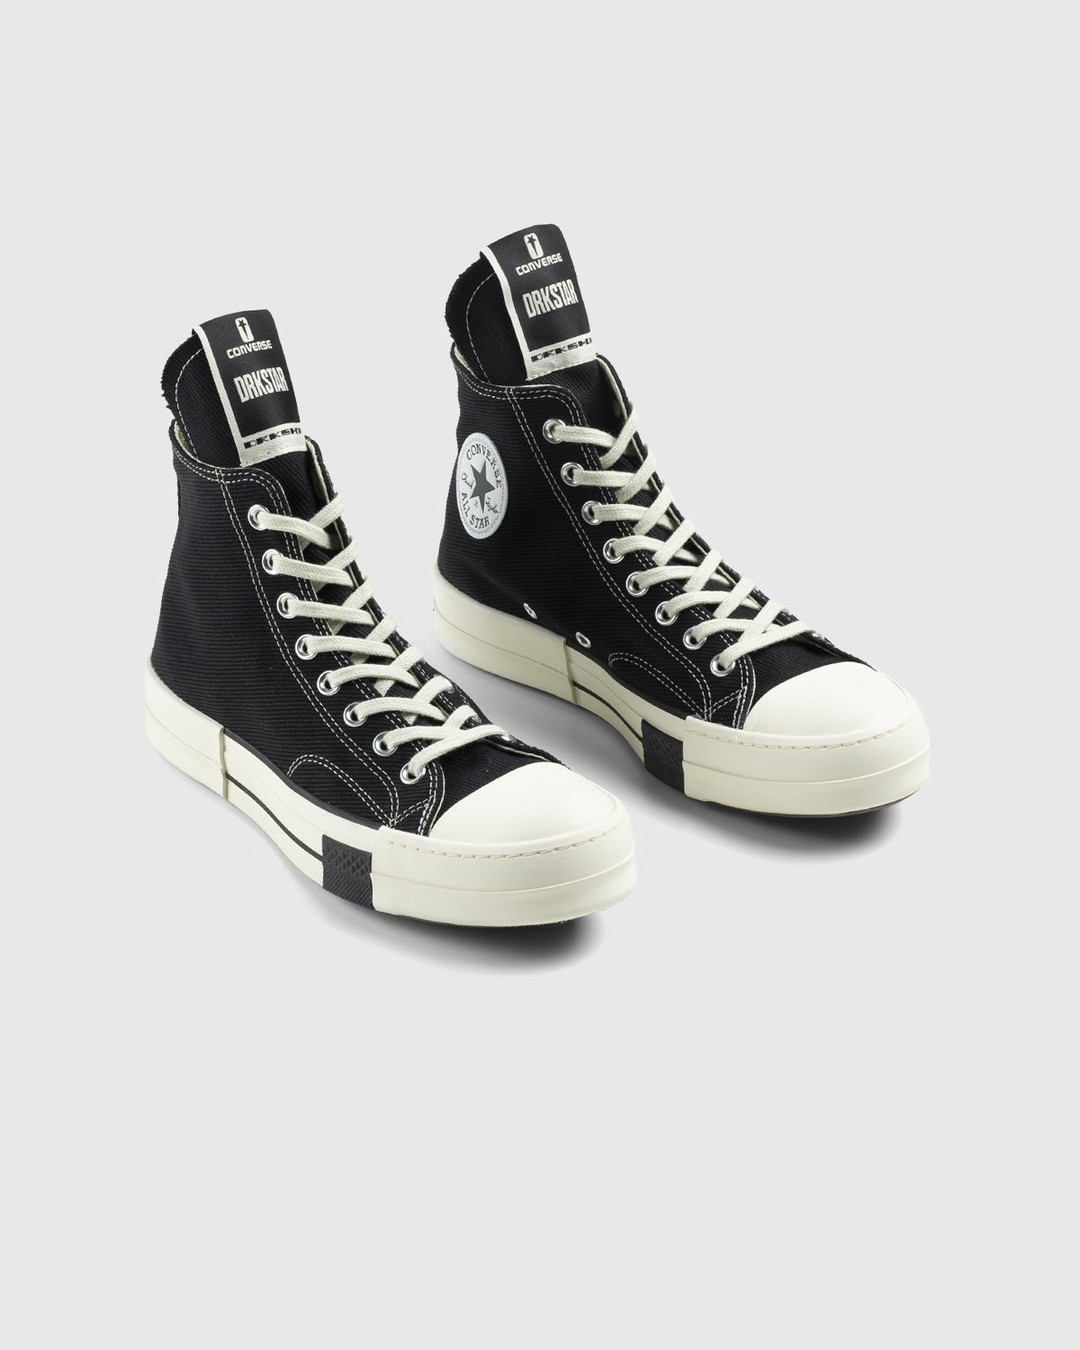 Converse x Rick Owens – DRKSTAR Chuck 70 High Black/Egret/Black - High Top Sneakers - Black - Image 3